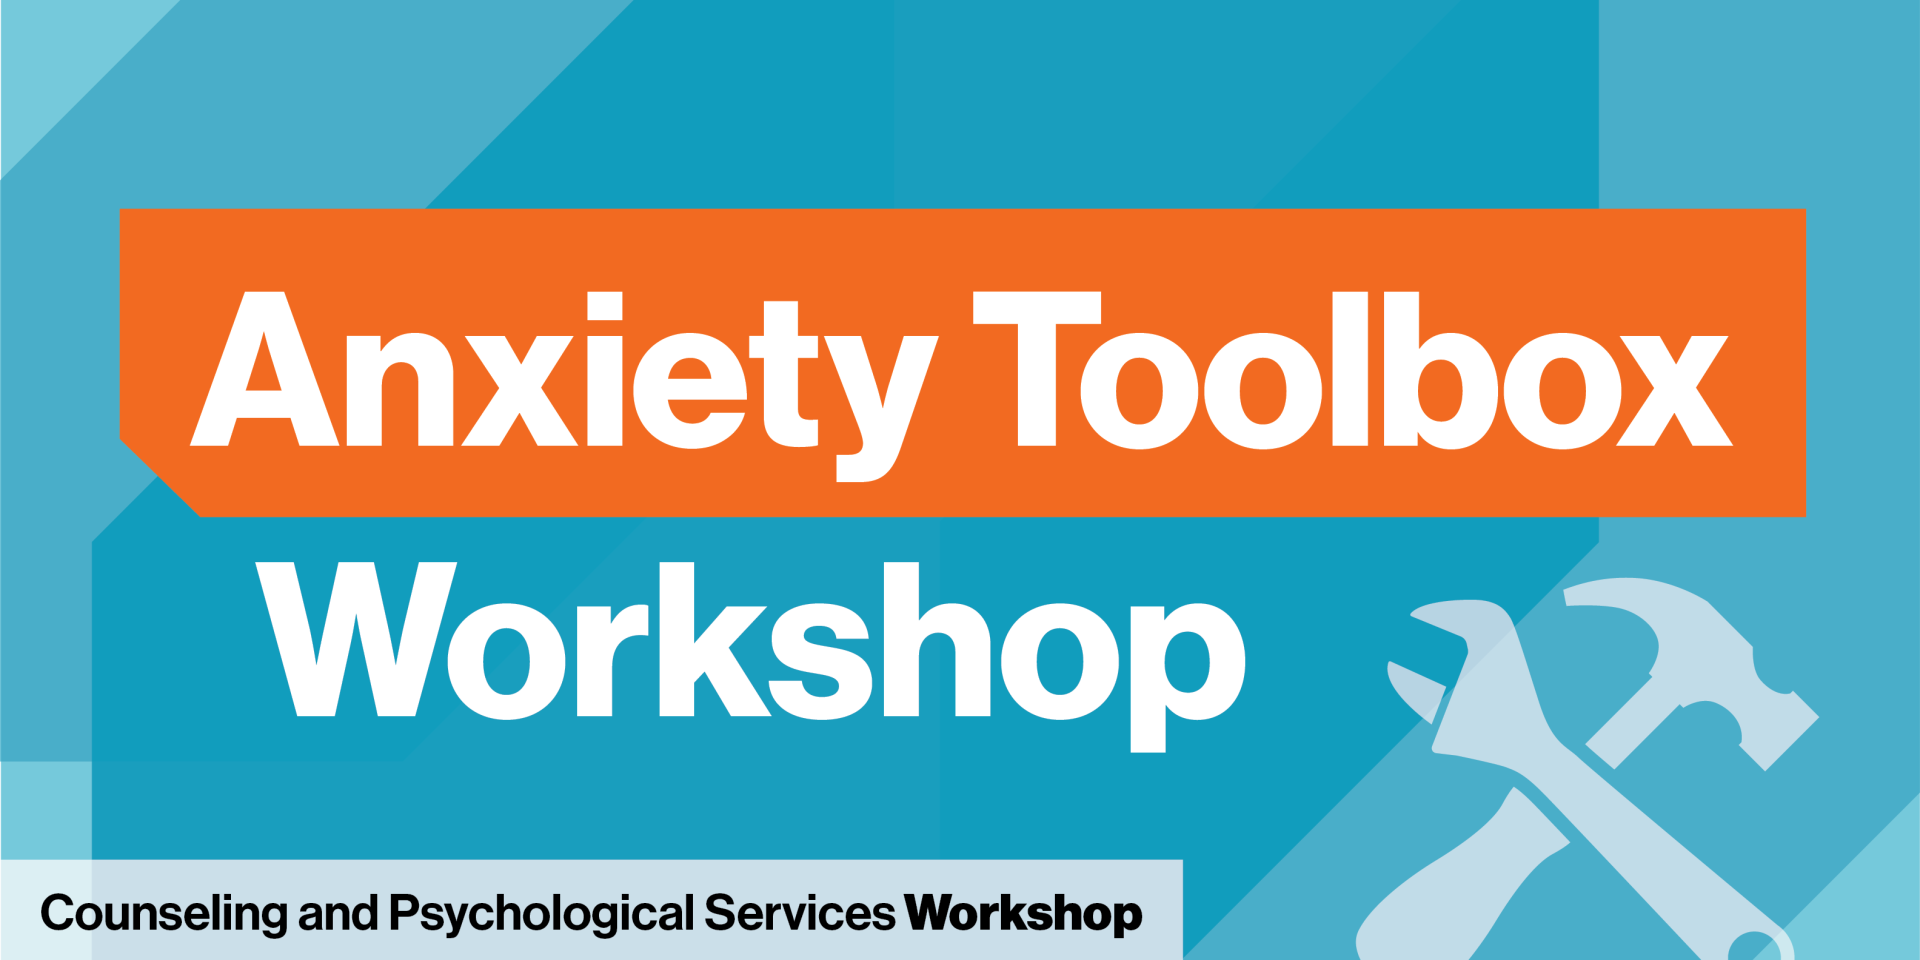 Anxiety Toolbox Workshop